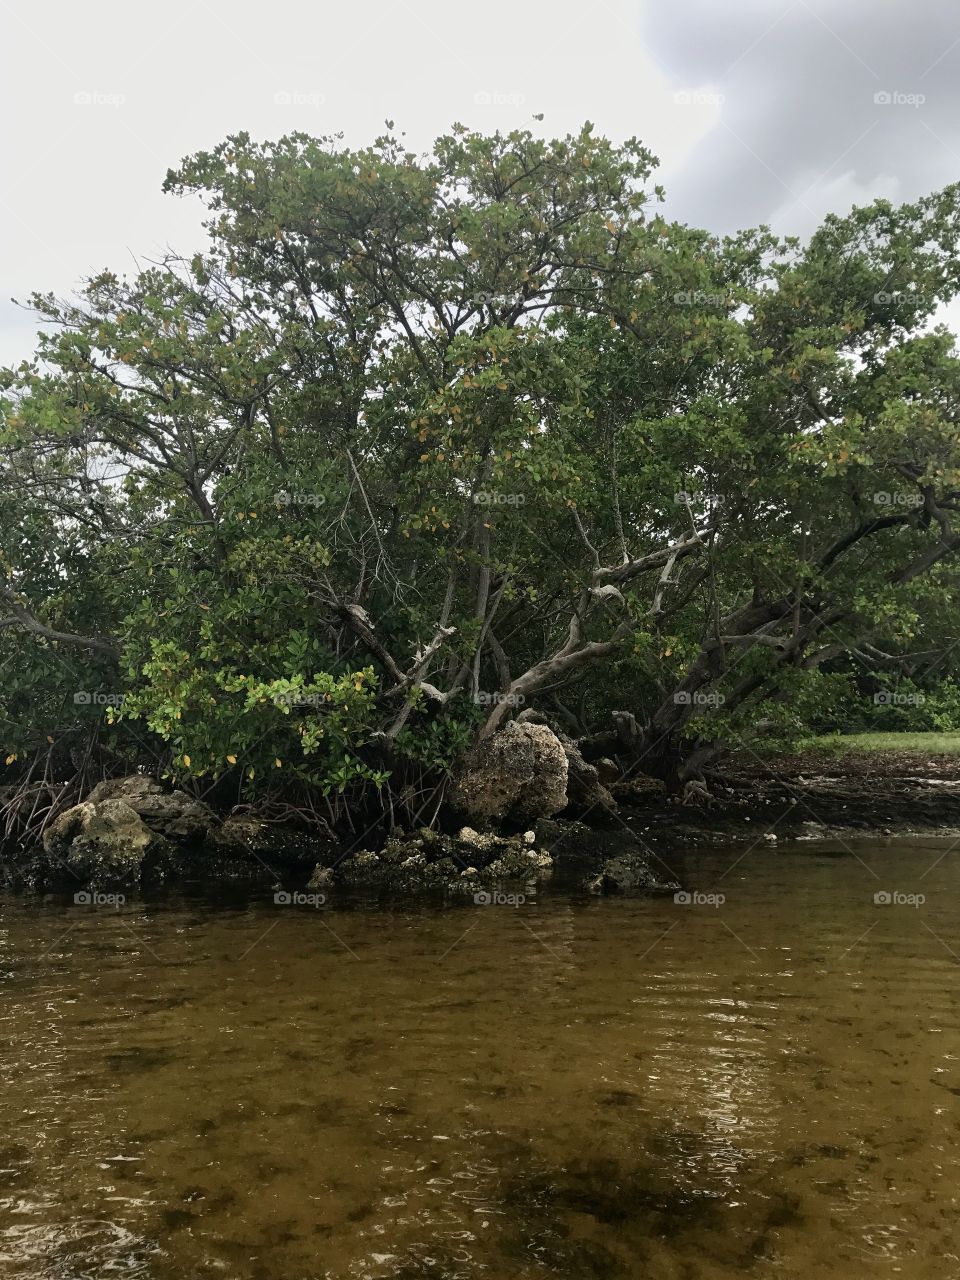 Rocky mangroves